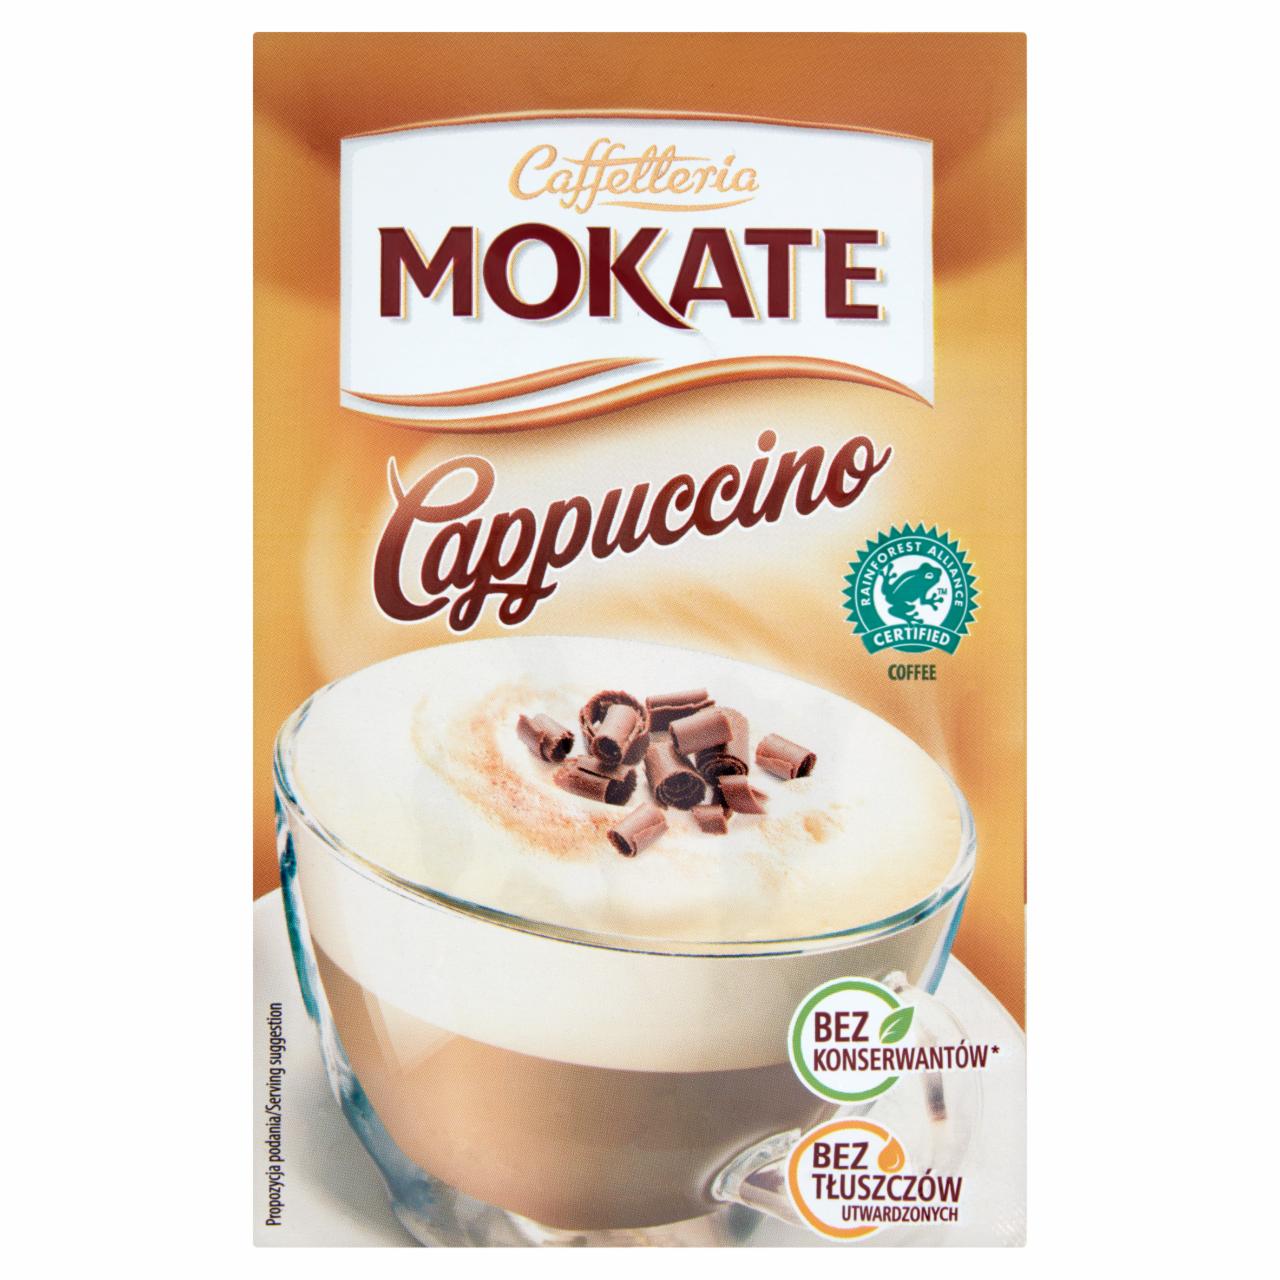 Zdjęcia - Mokate Caffetteria Cappuccino caffee 15 g